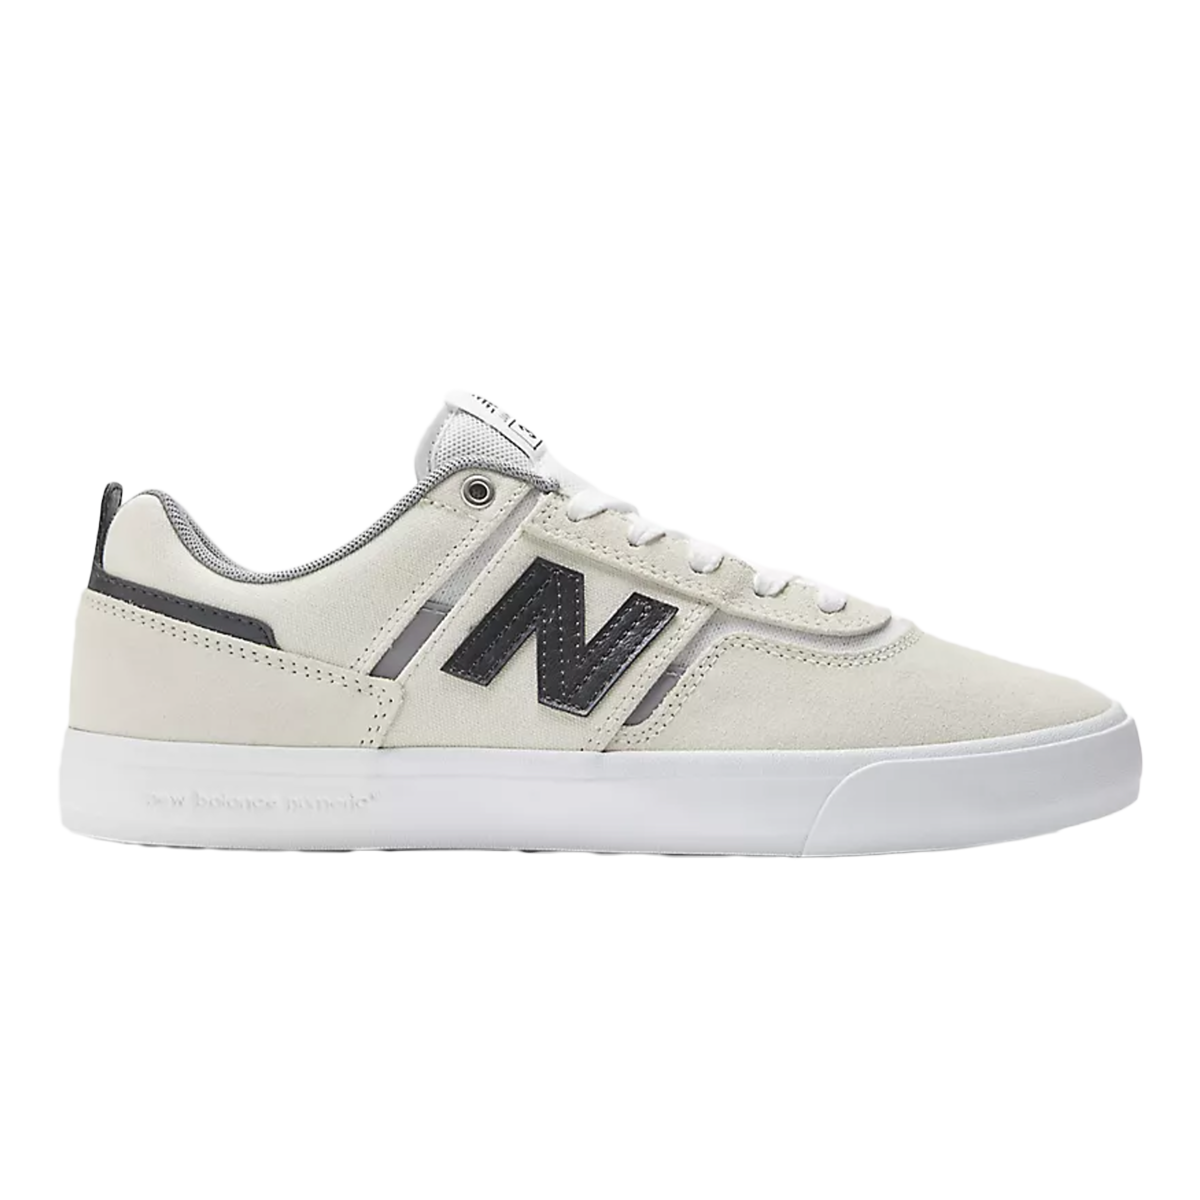 New Balance NM 306 Shoes - White/Black